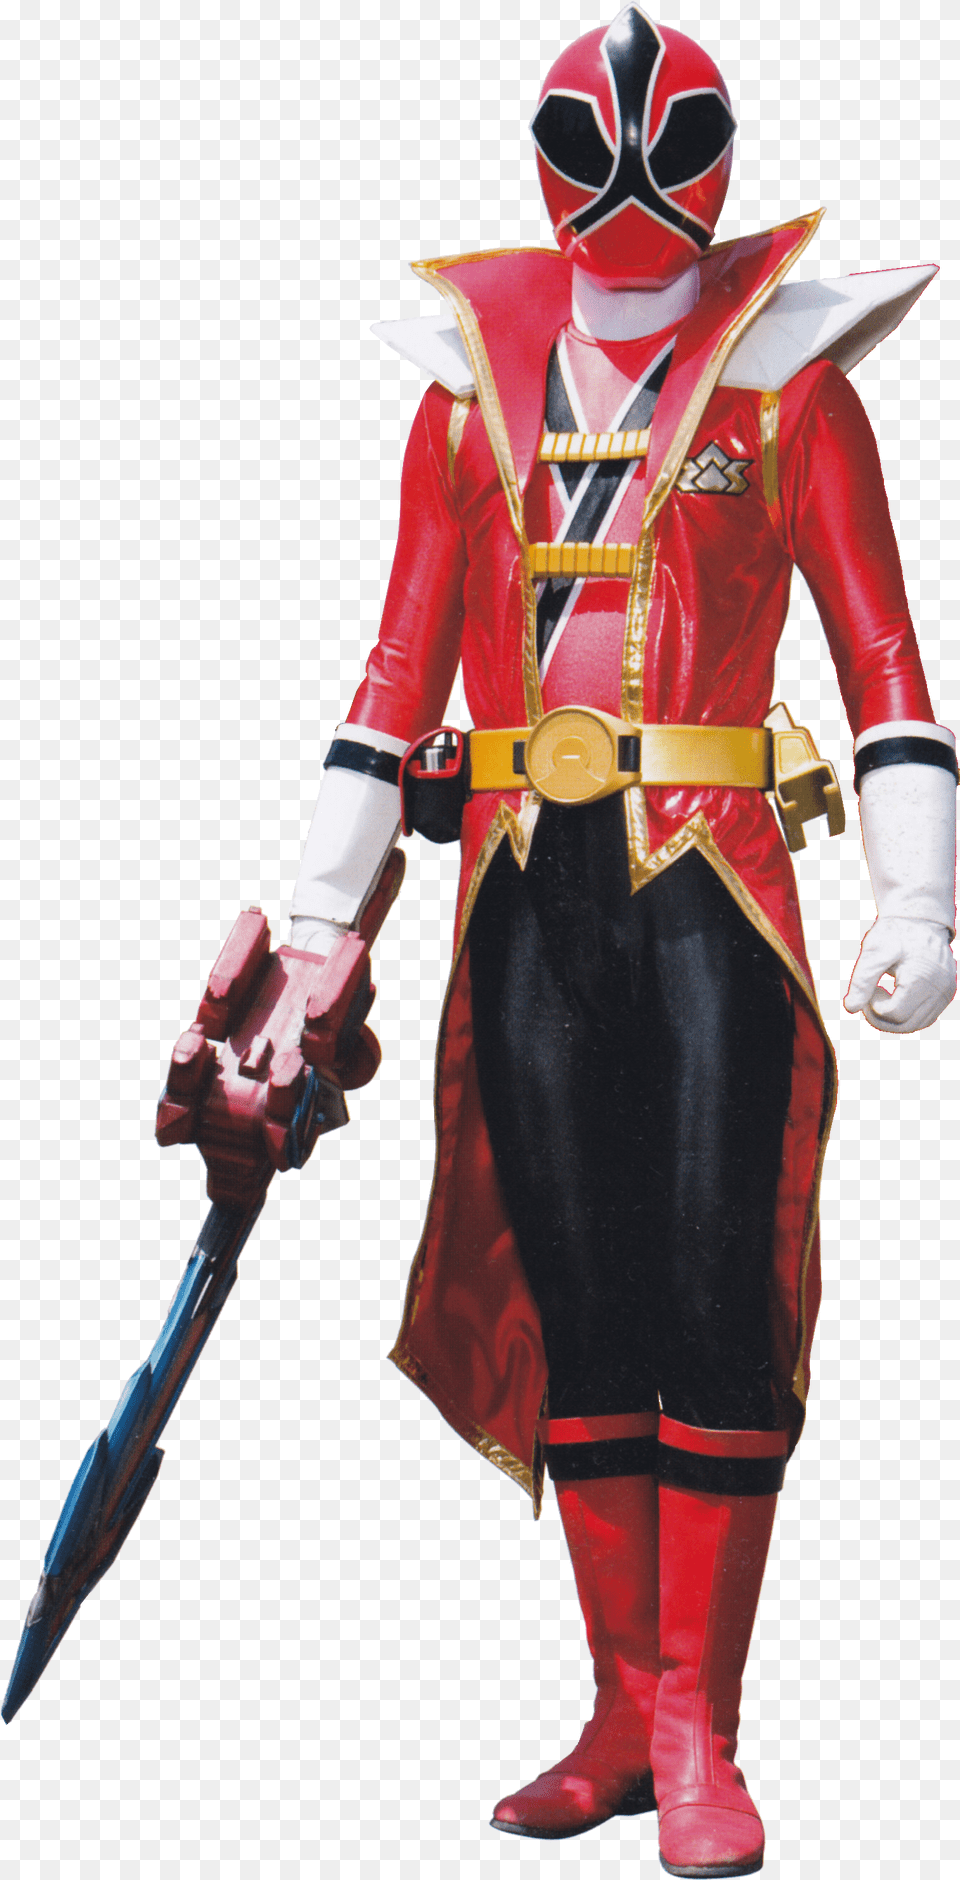 Transparent Ranger Clipart Power Ranger Super Samurai Red Ranger, Person, Clothing, Costume, Adult Png